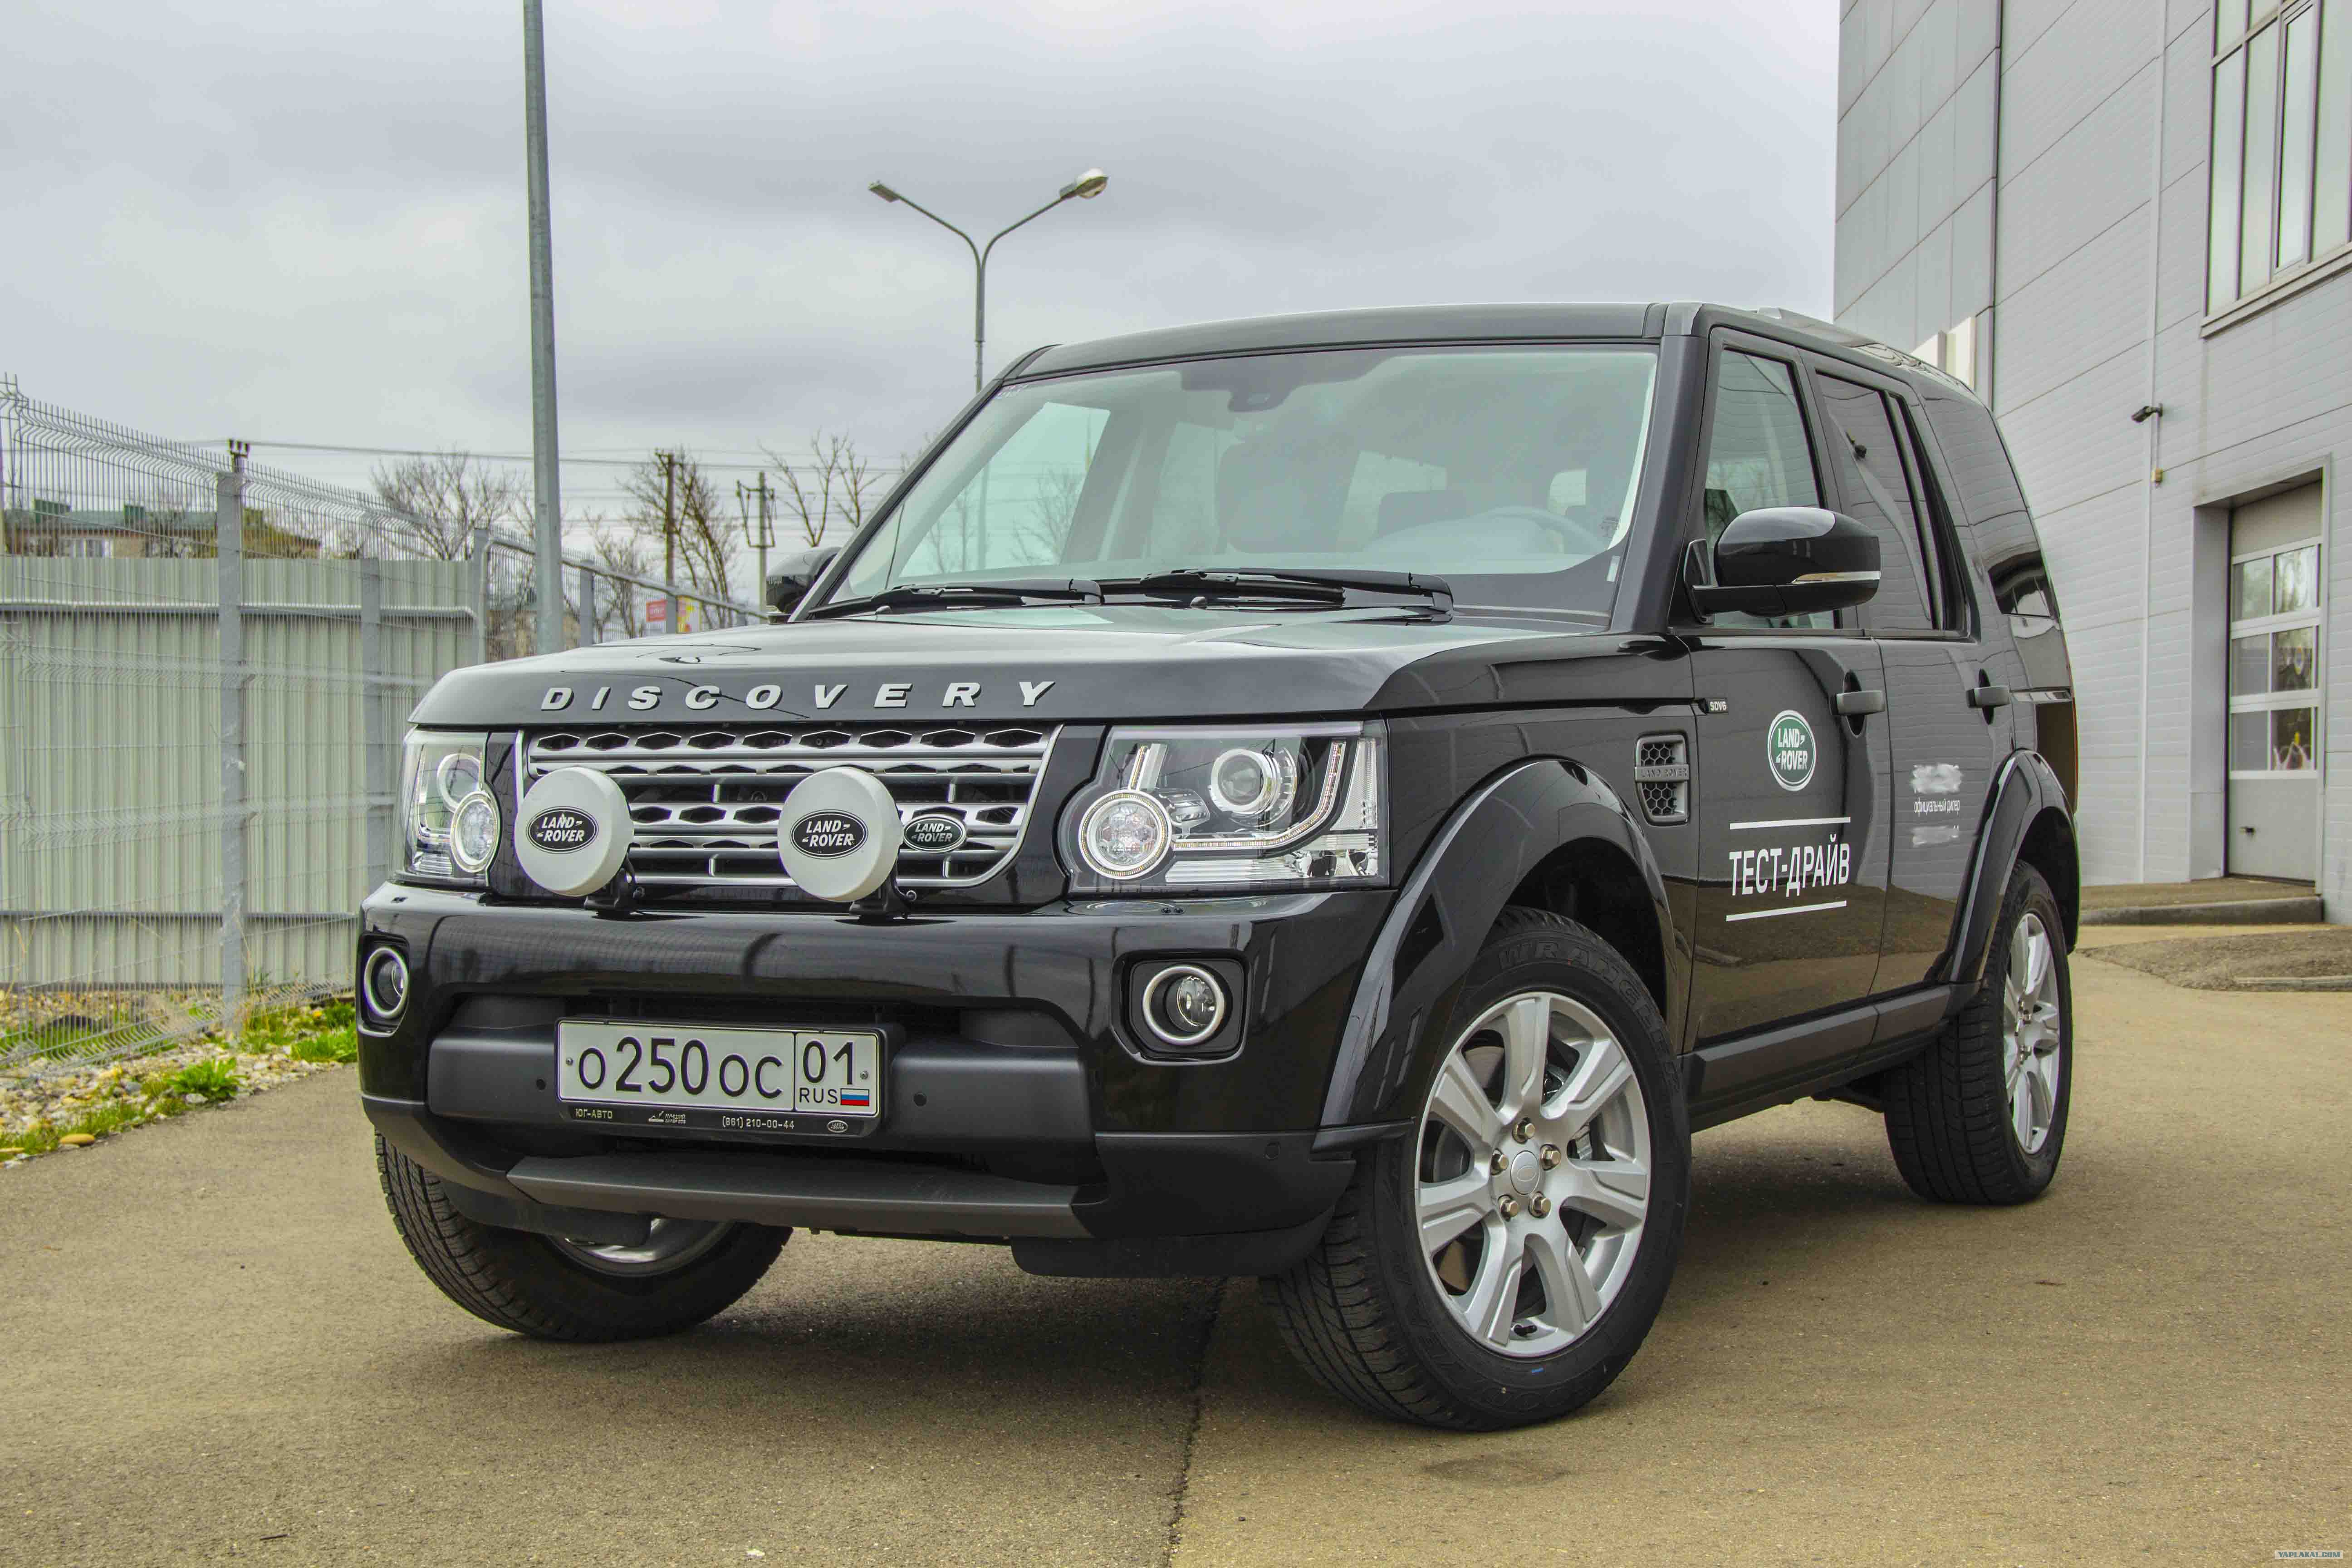 Дискавери 4.4 бензин. Land Rover Discovery 4. Land Rover Дискавери 4. Land Rover Discovery 4 2016. Land Rover Discovery 3.